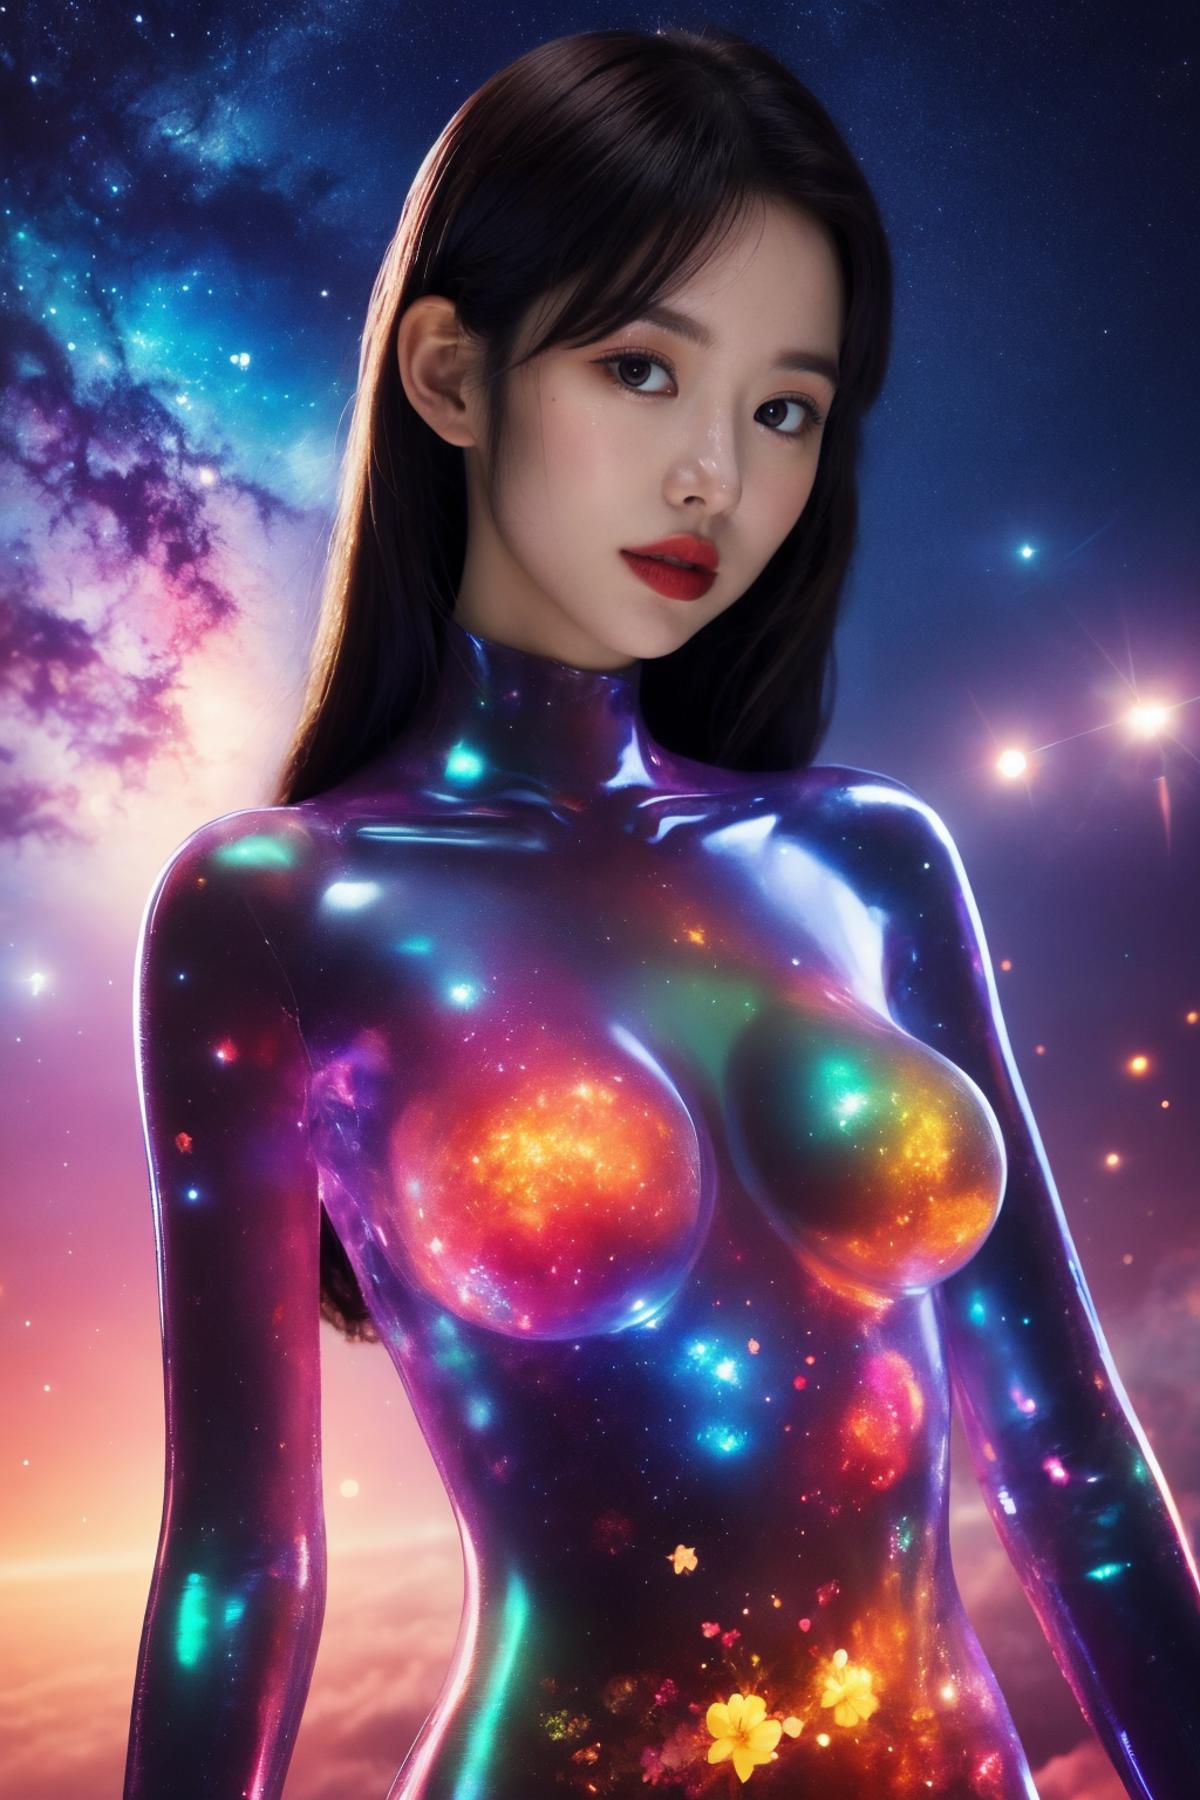 AI model image by kimchi88